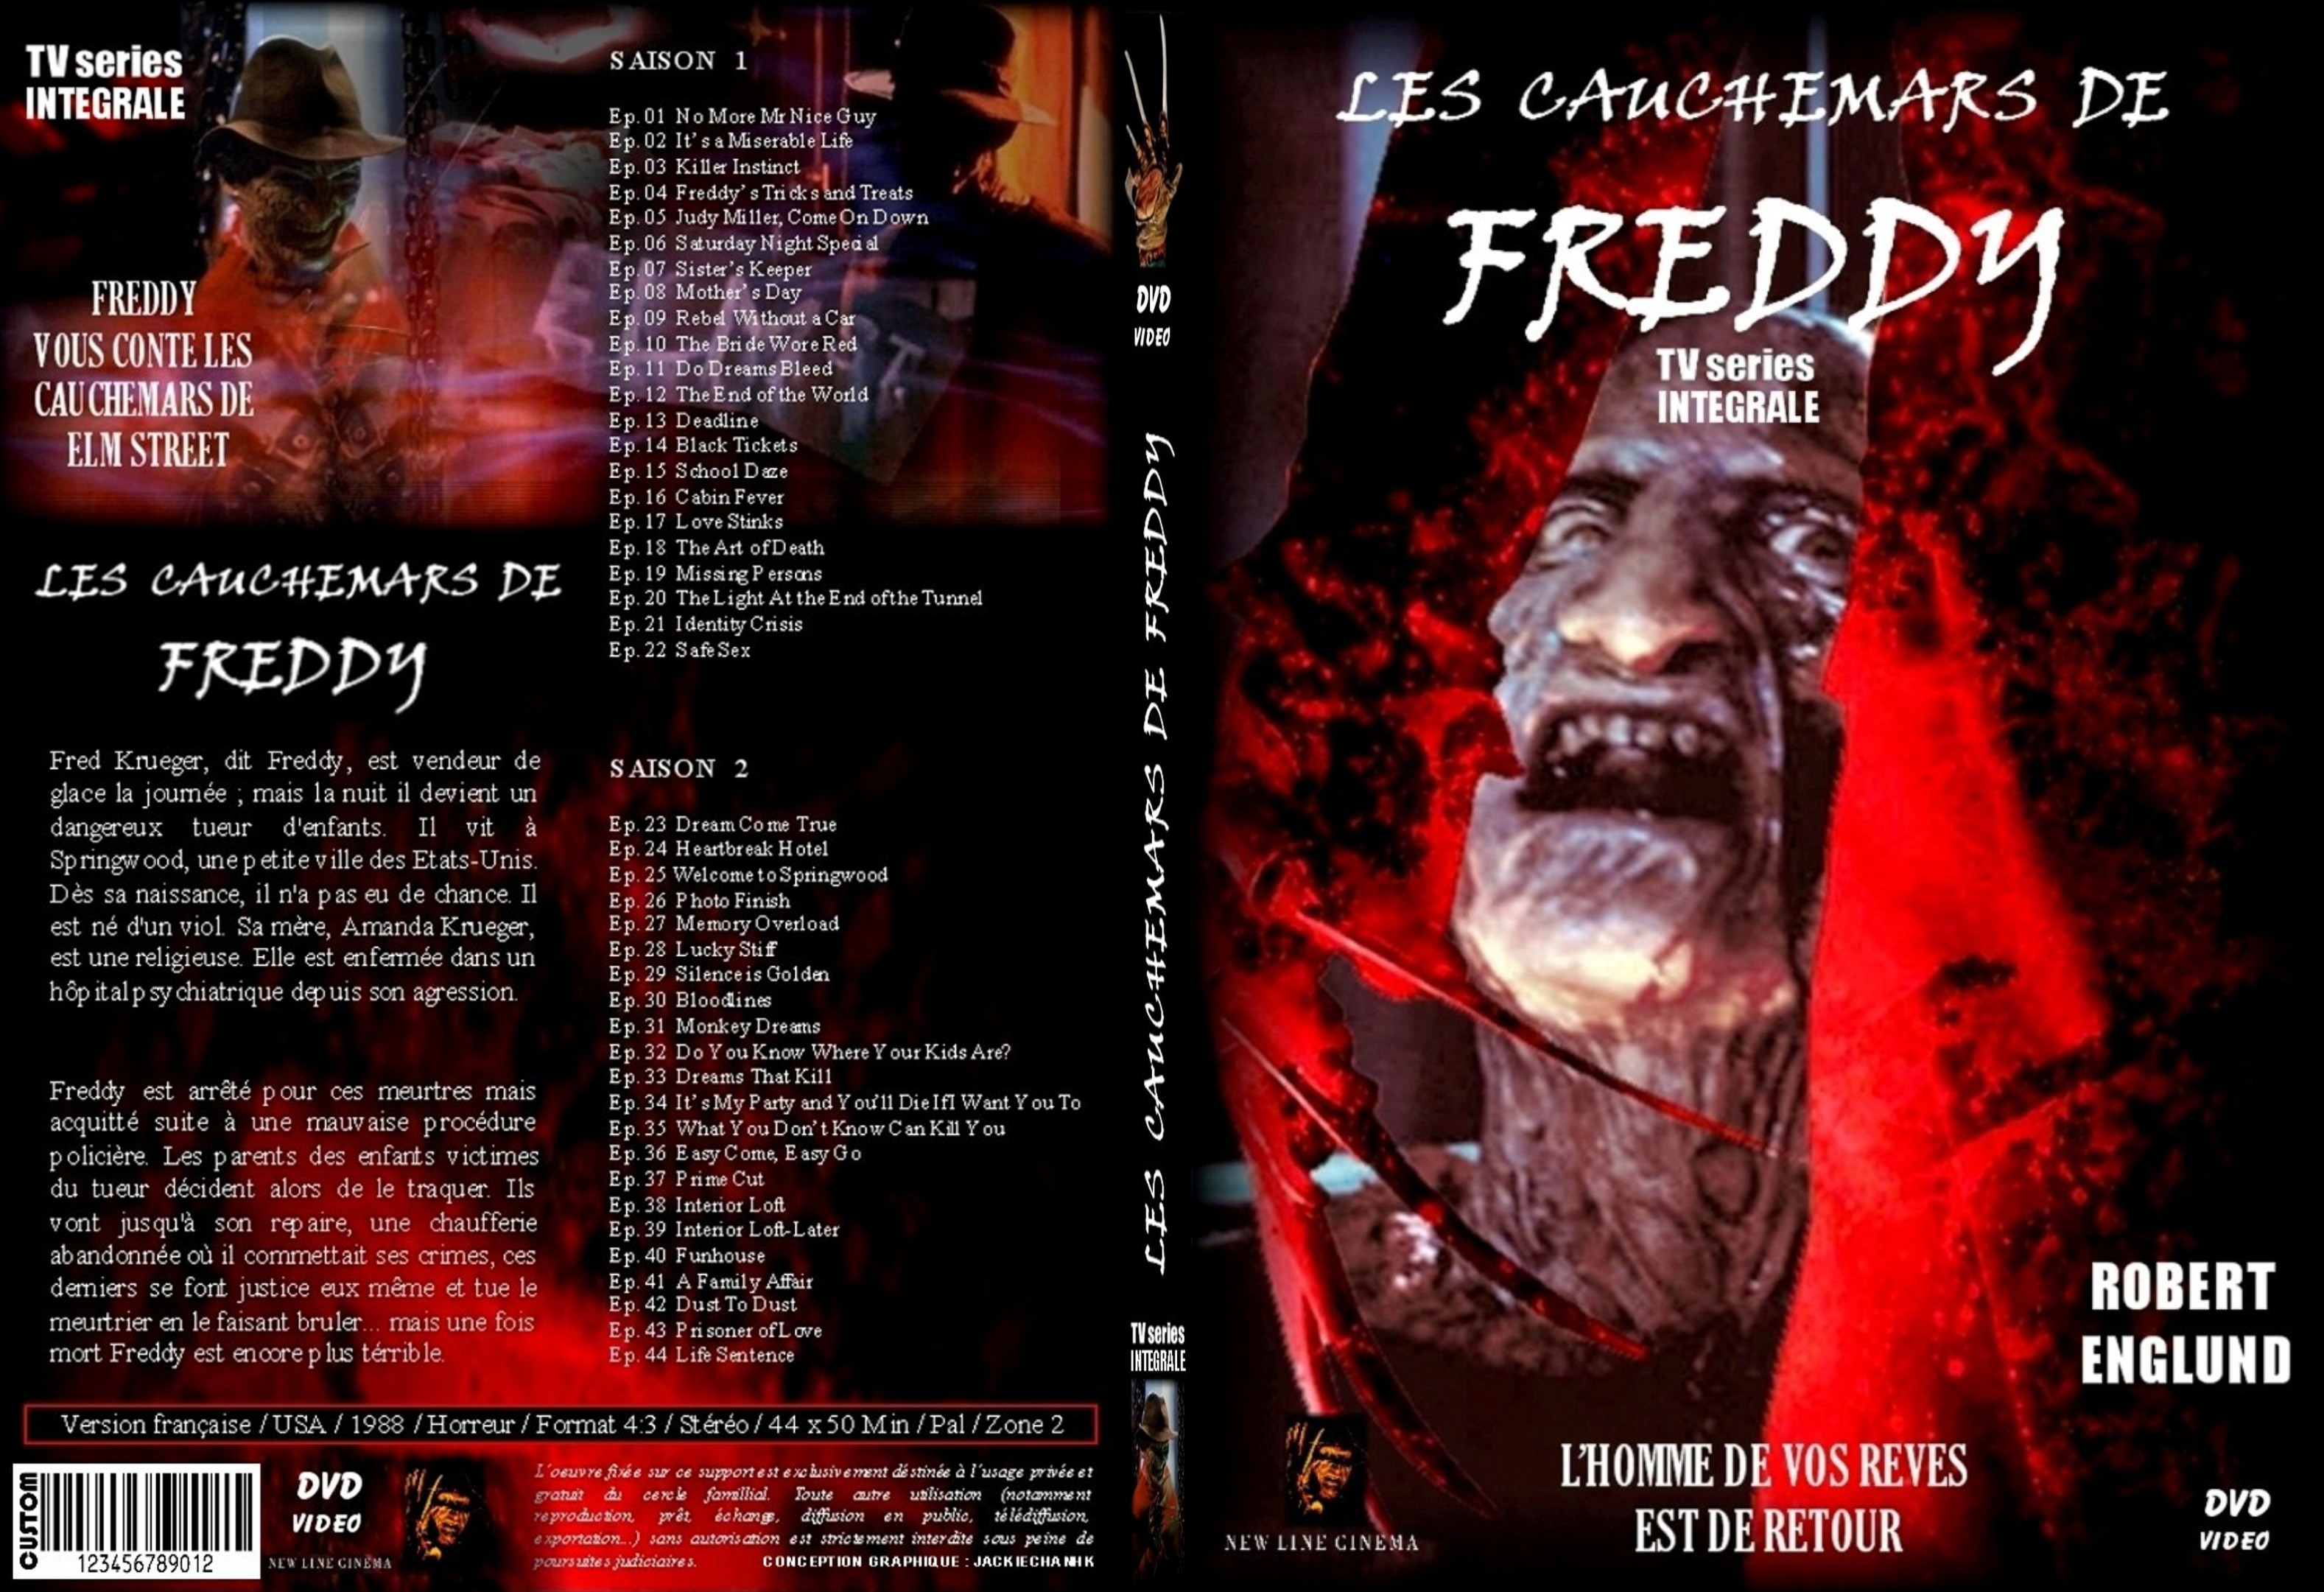 Jaquette DVD Les cauchemars de Freddy (intgrale srie TV) custom - SLIM